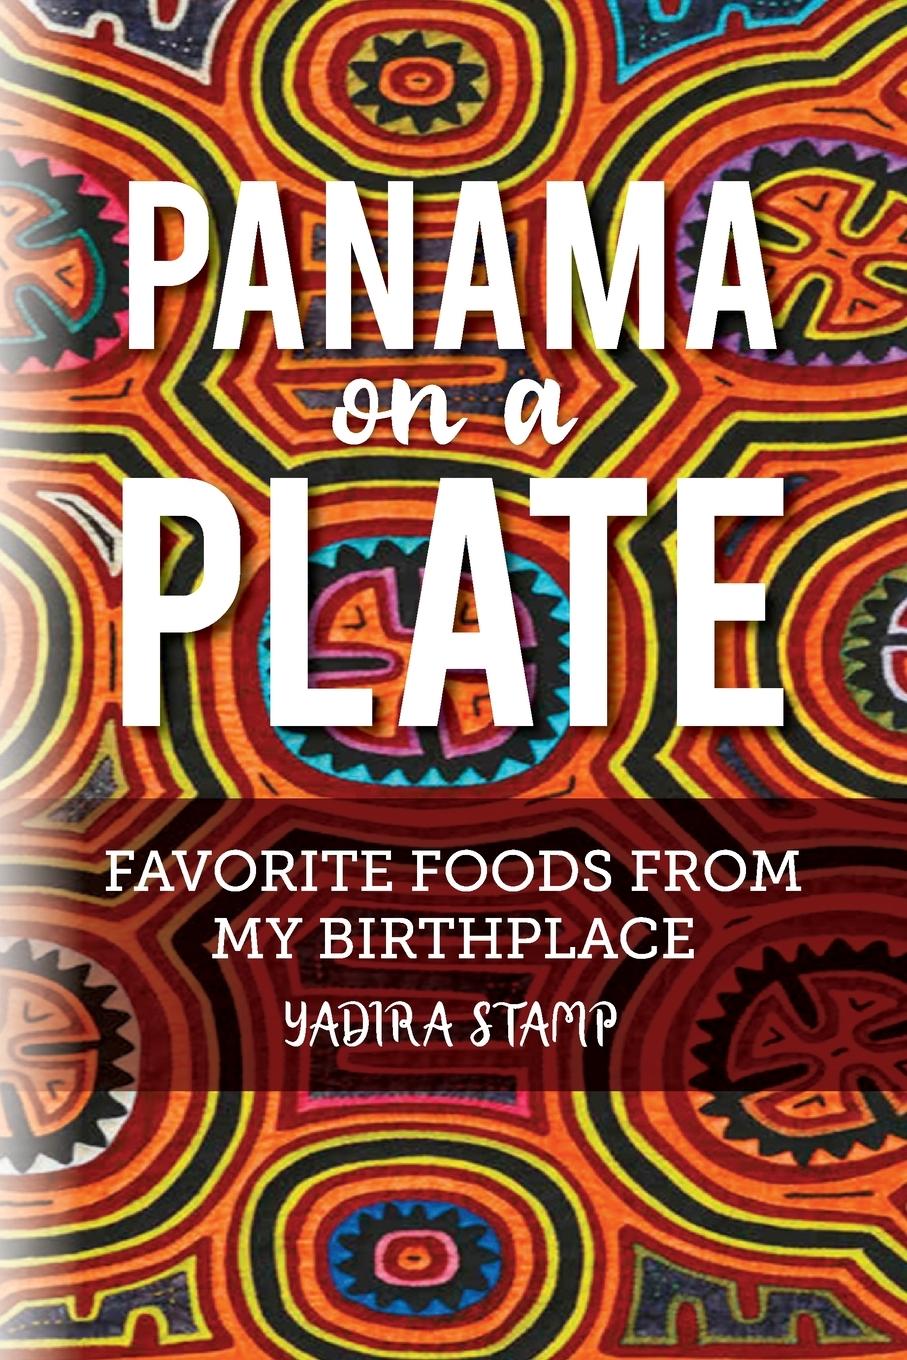 Book Panama on a Plate 